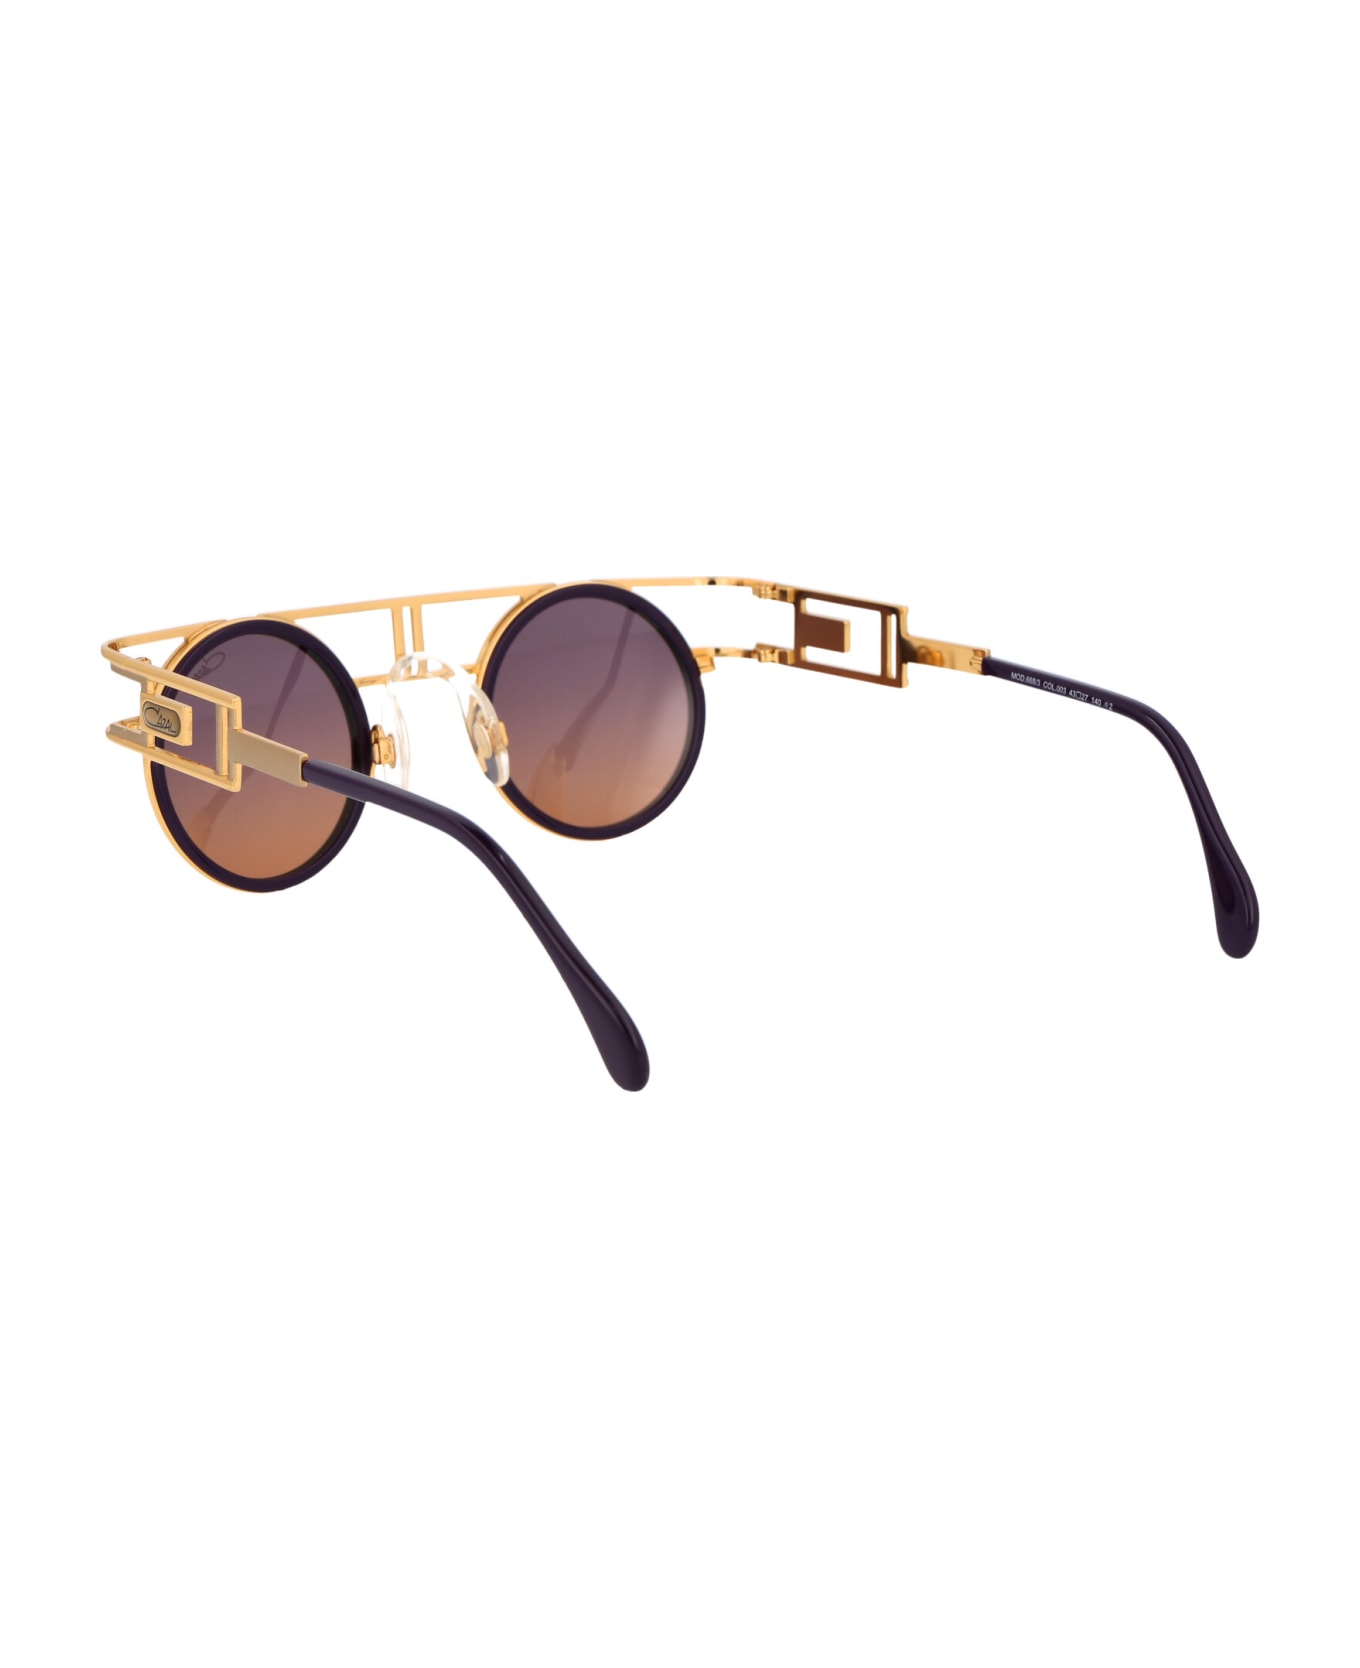 Cazal Mod. 668/3 Sunglasses - 003 GOLD VIOLET